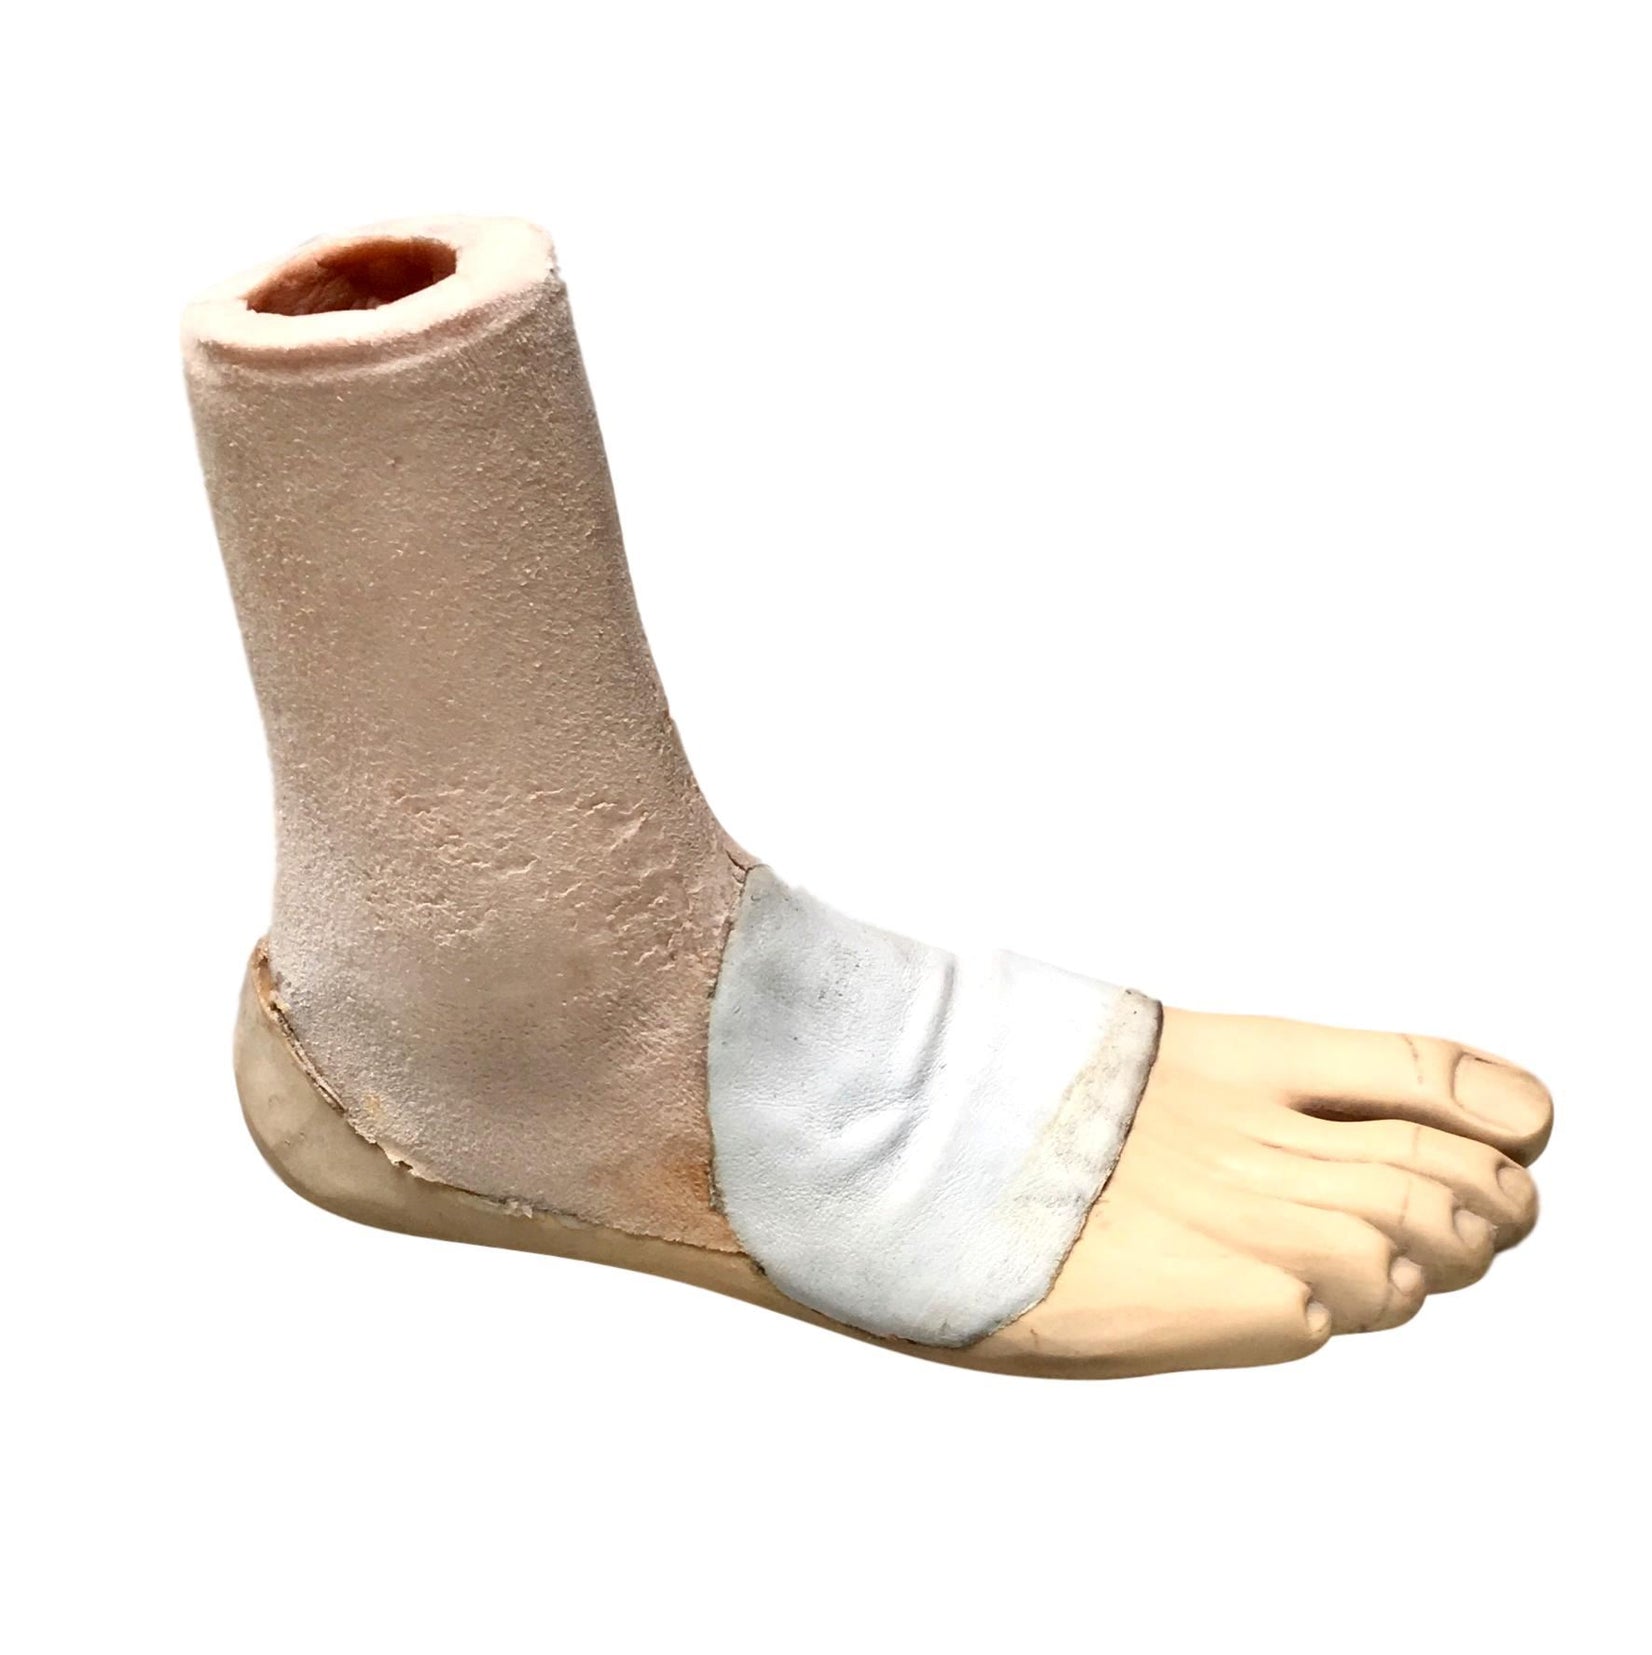 Vintage Prosthetic Foot